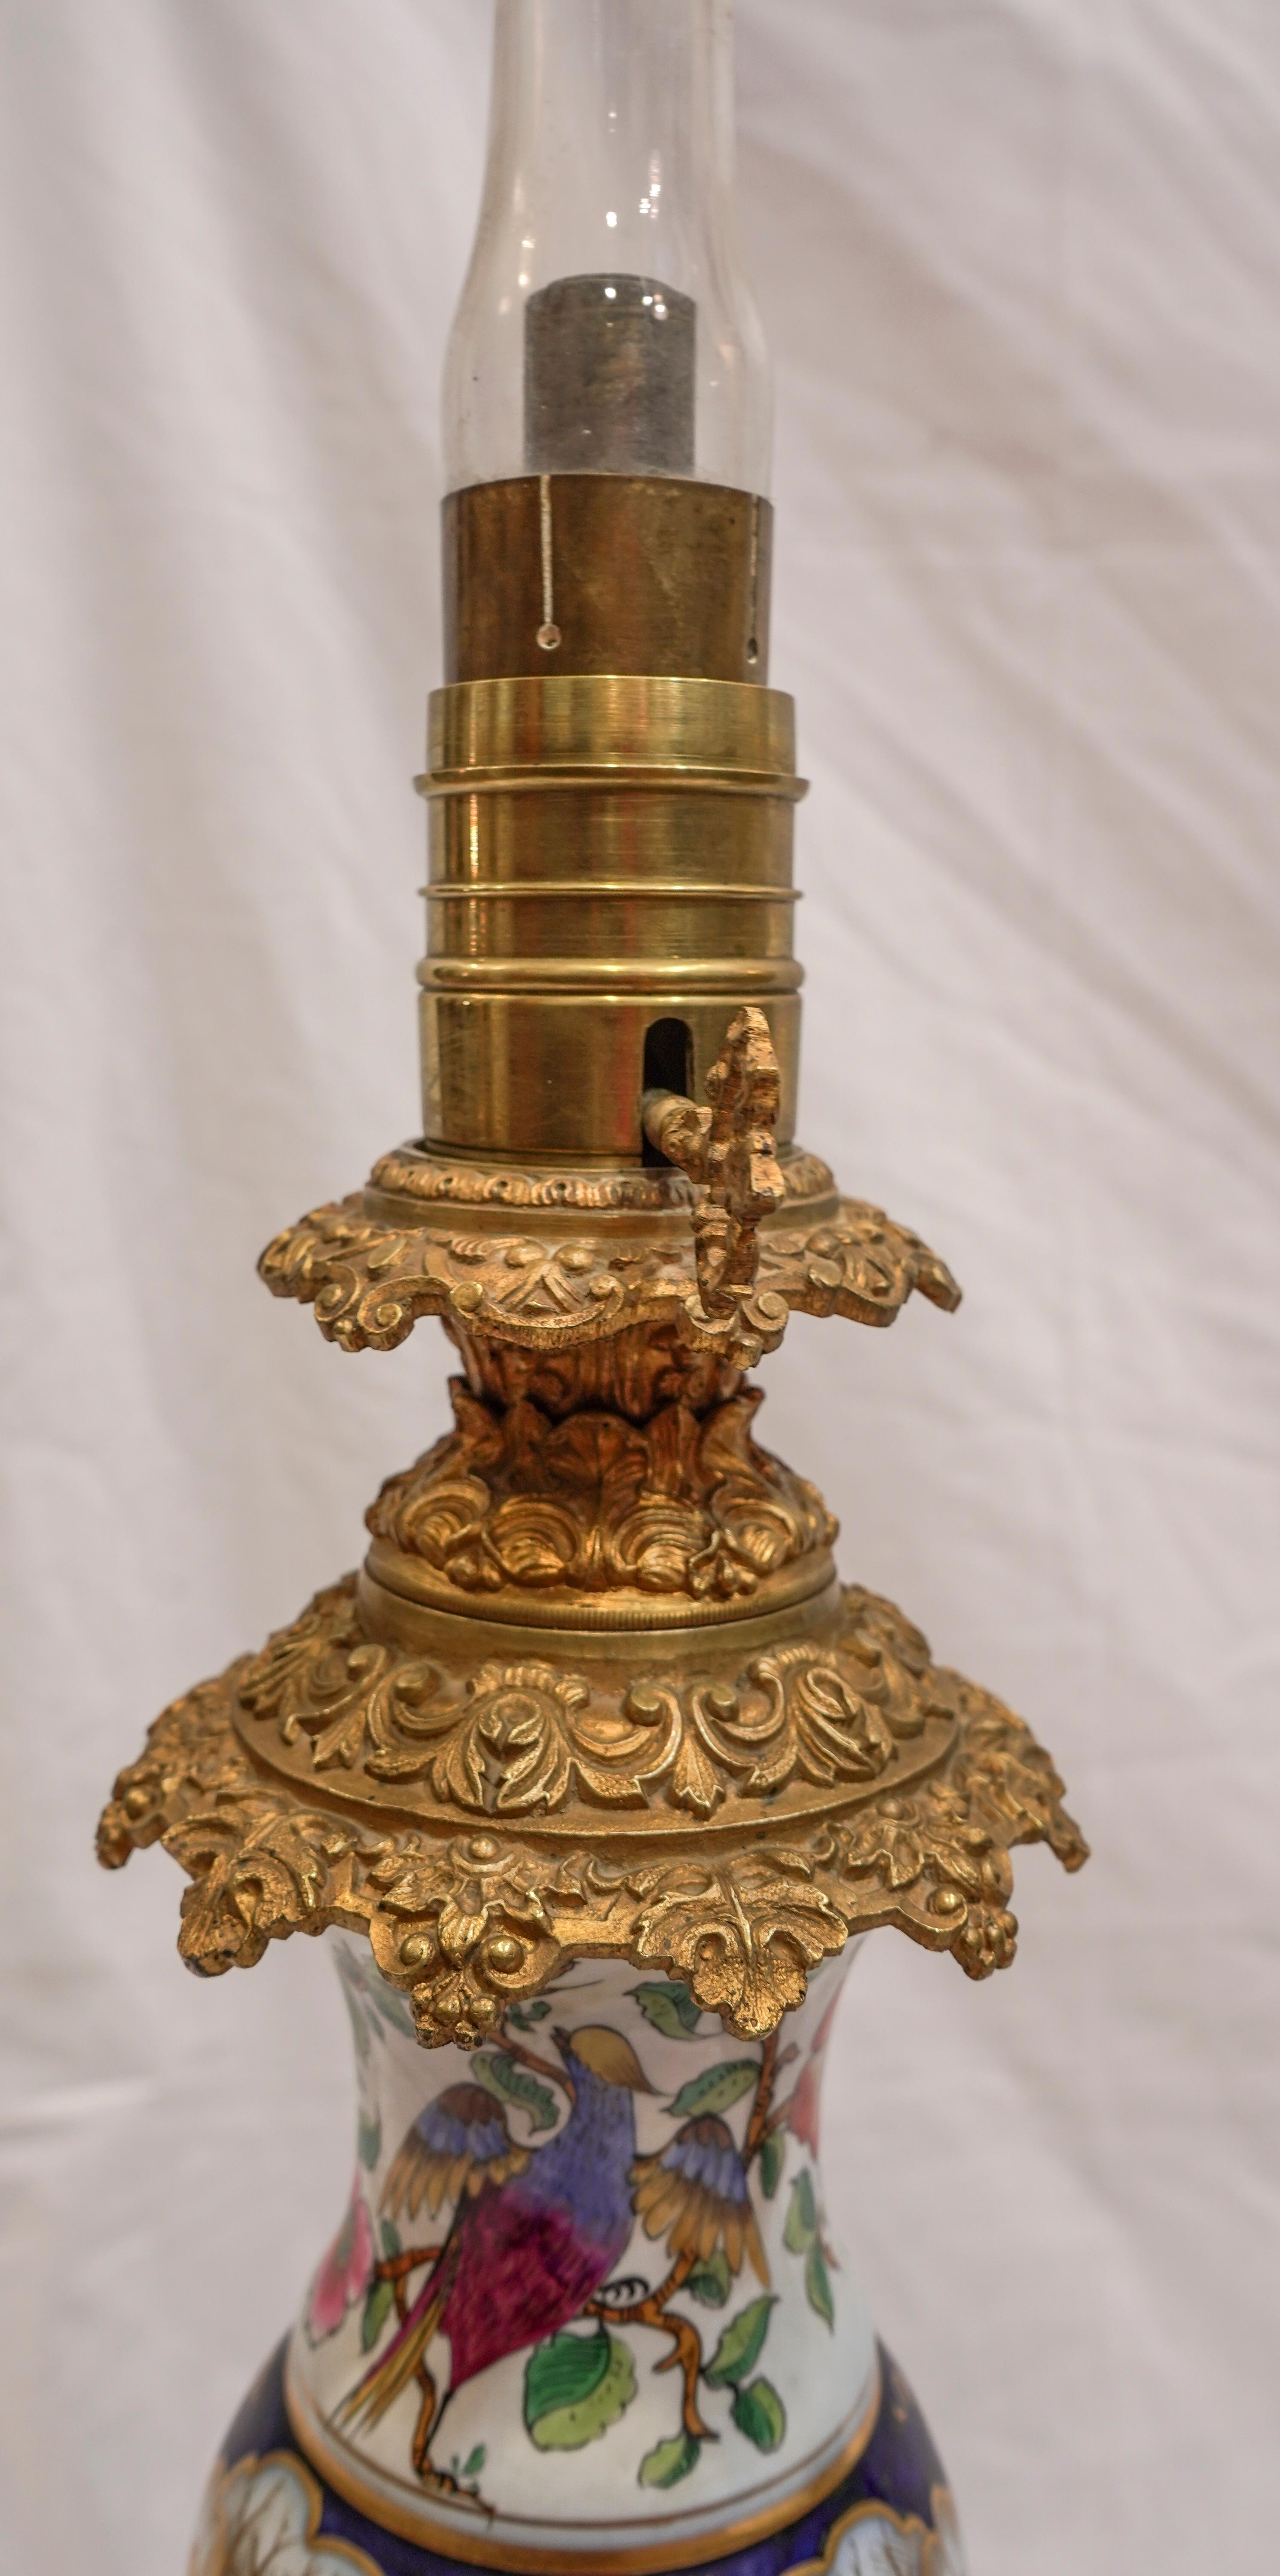 Napoleon III 19th Century Cobaltblue Samson Porcelain Vases Made Oil Lamps, Ormolu Bronzes